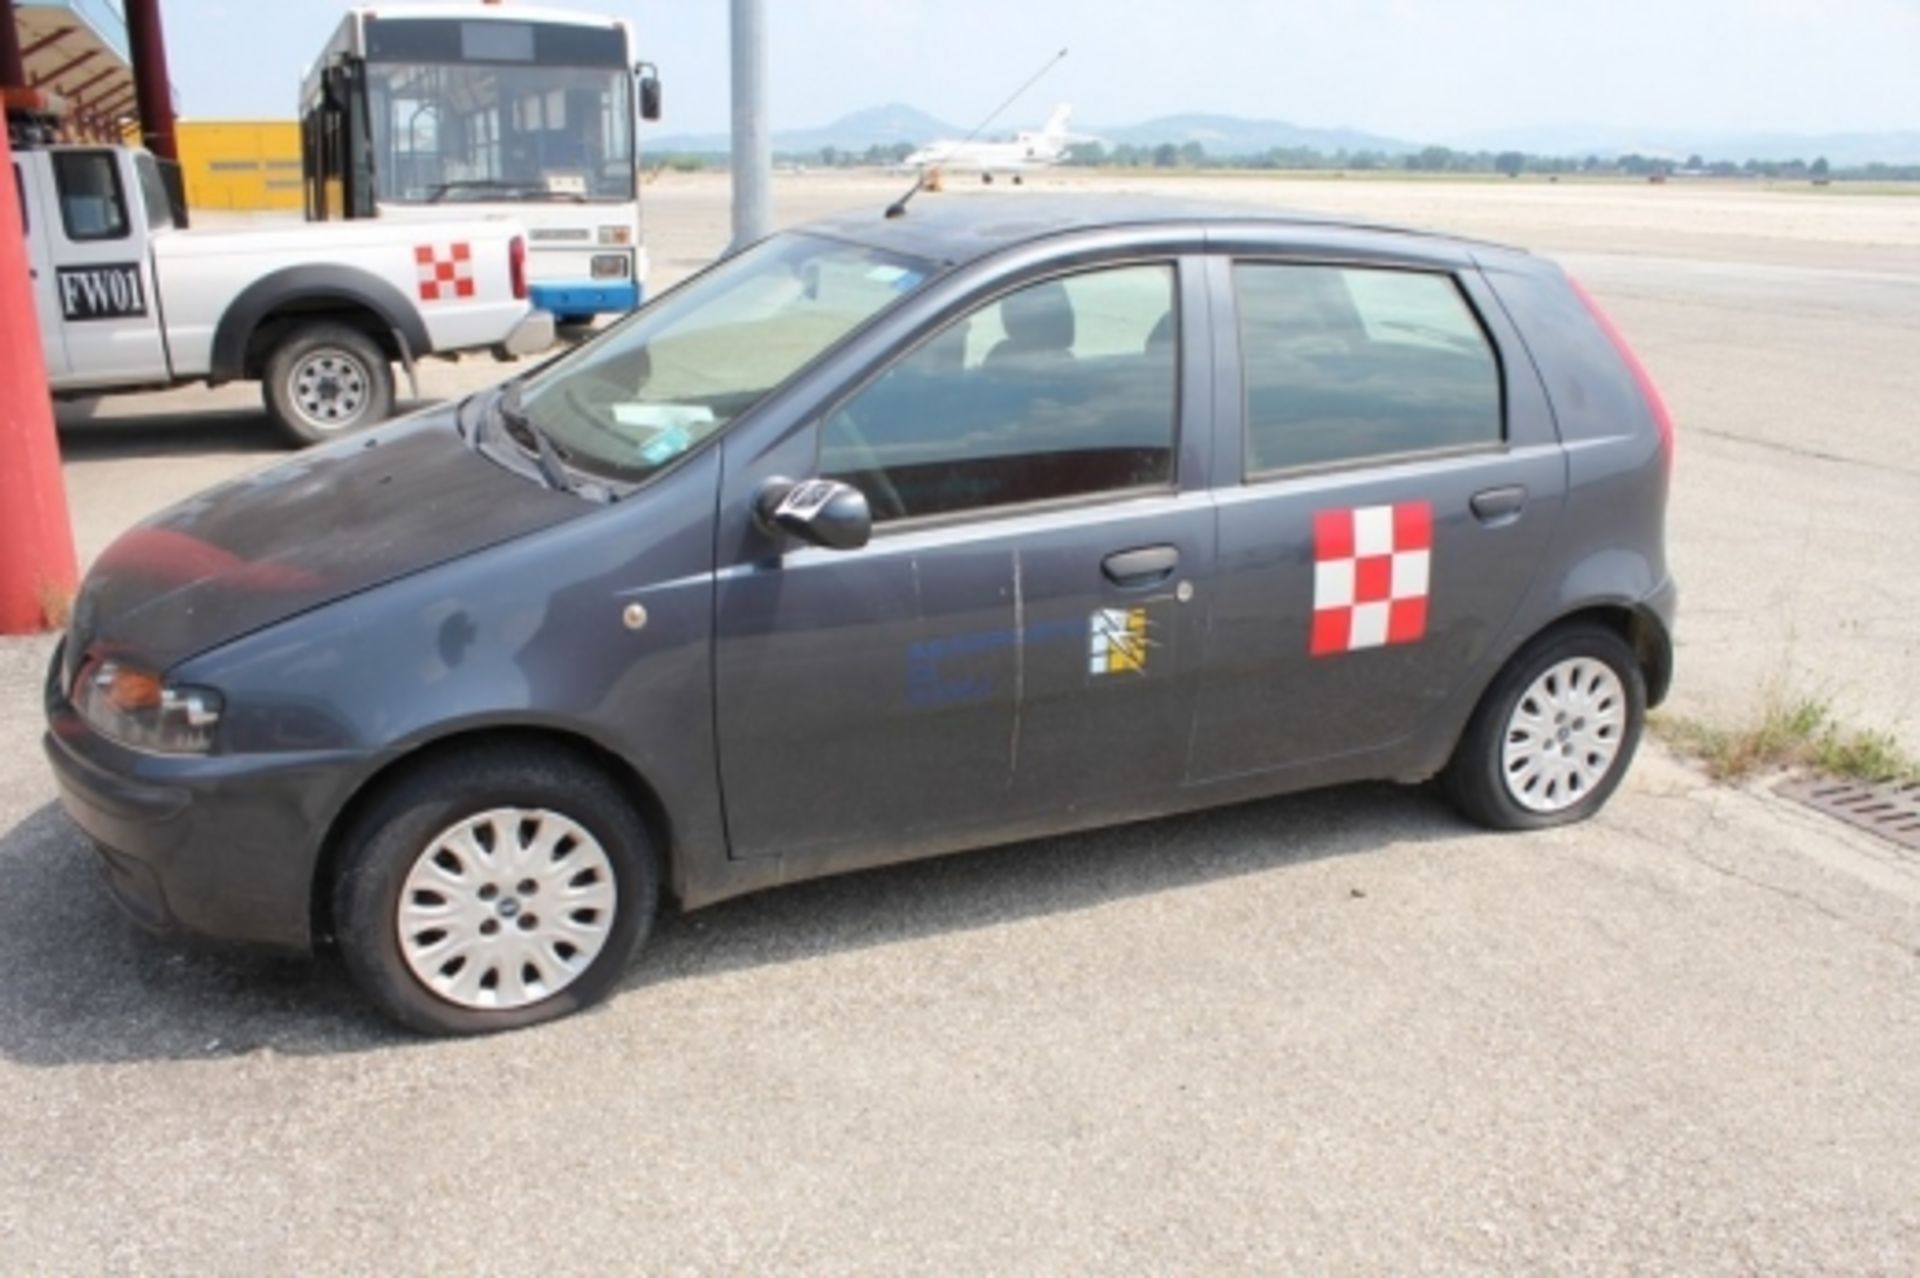 1,LOT INCLUDES: Fiat Panda 4x4 ex bof19224 (purchase year 2003), Fiat Punto Plate:BG216HF (